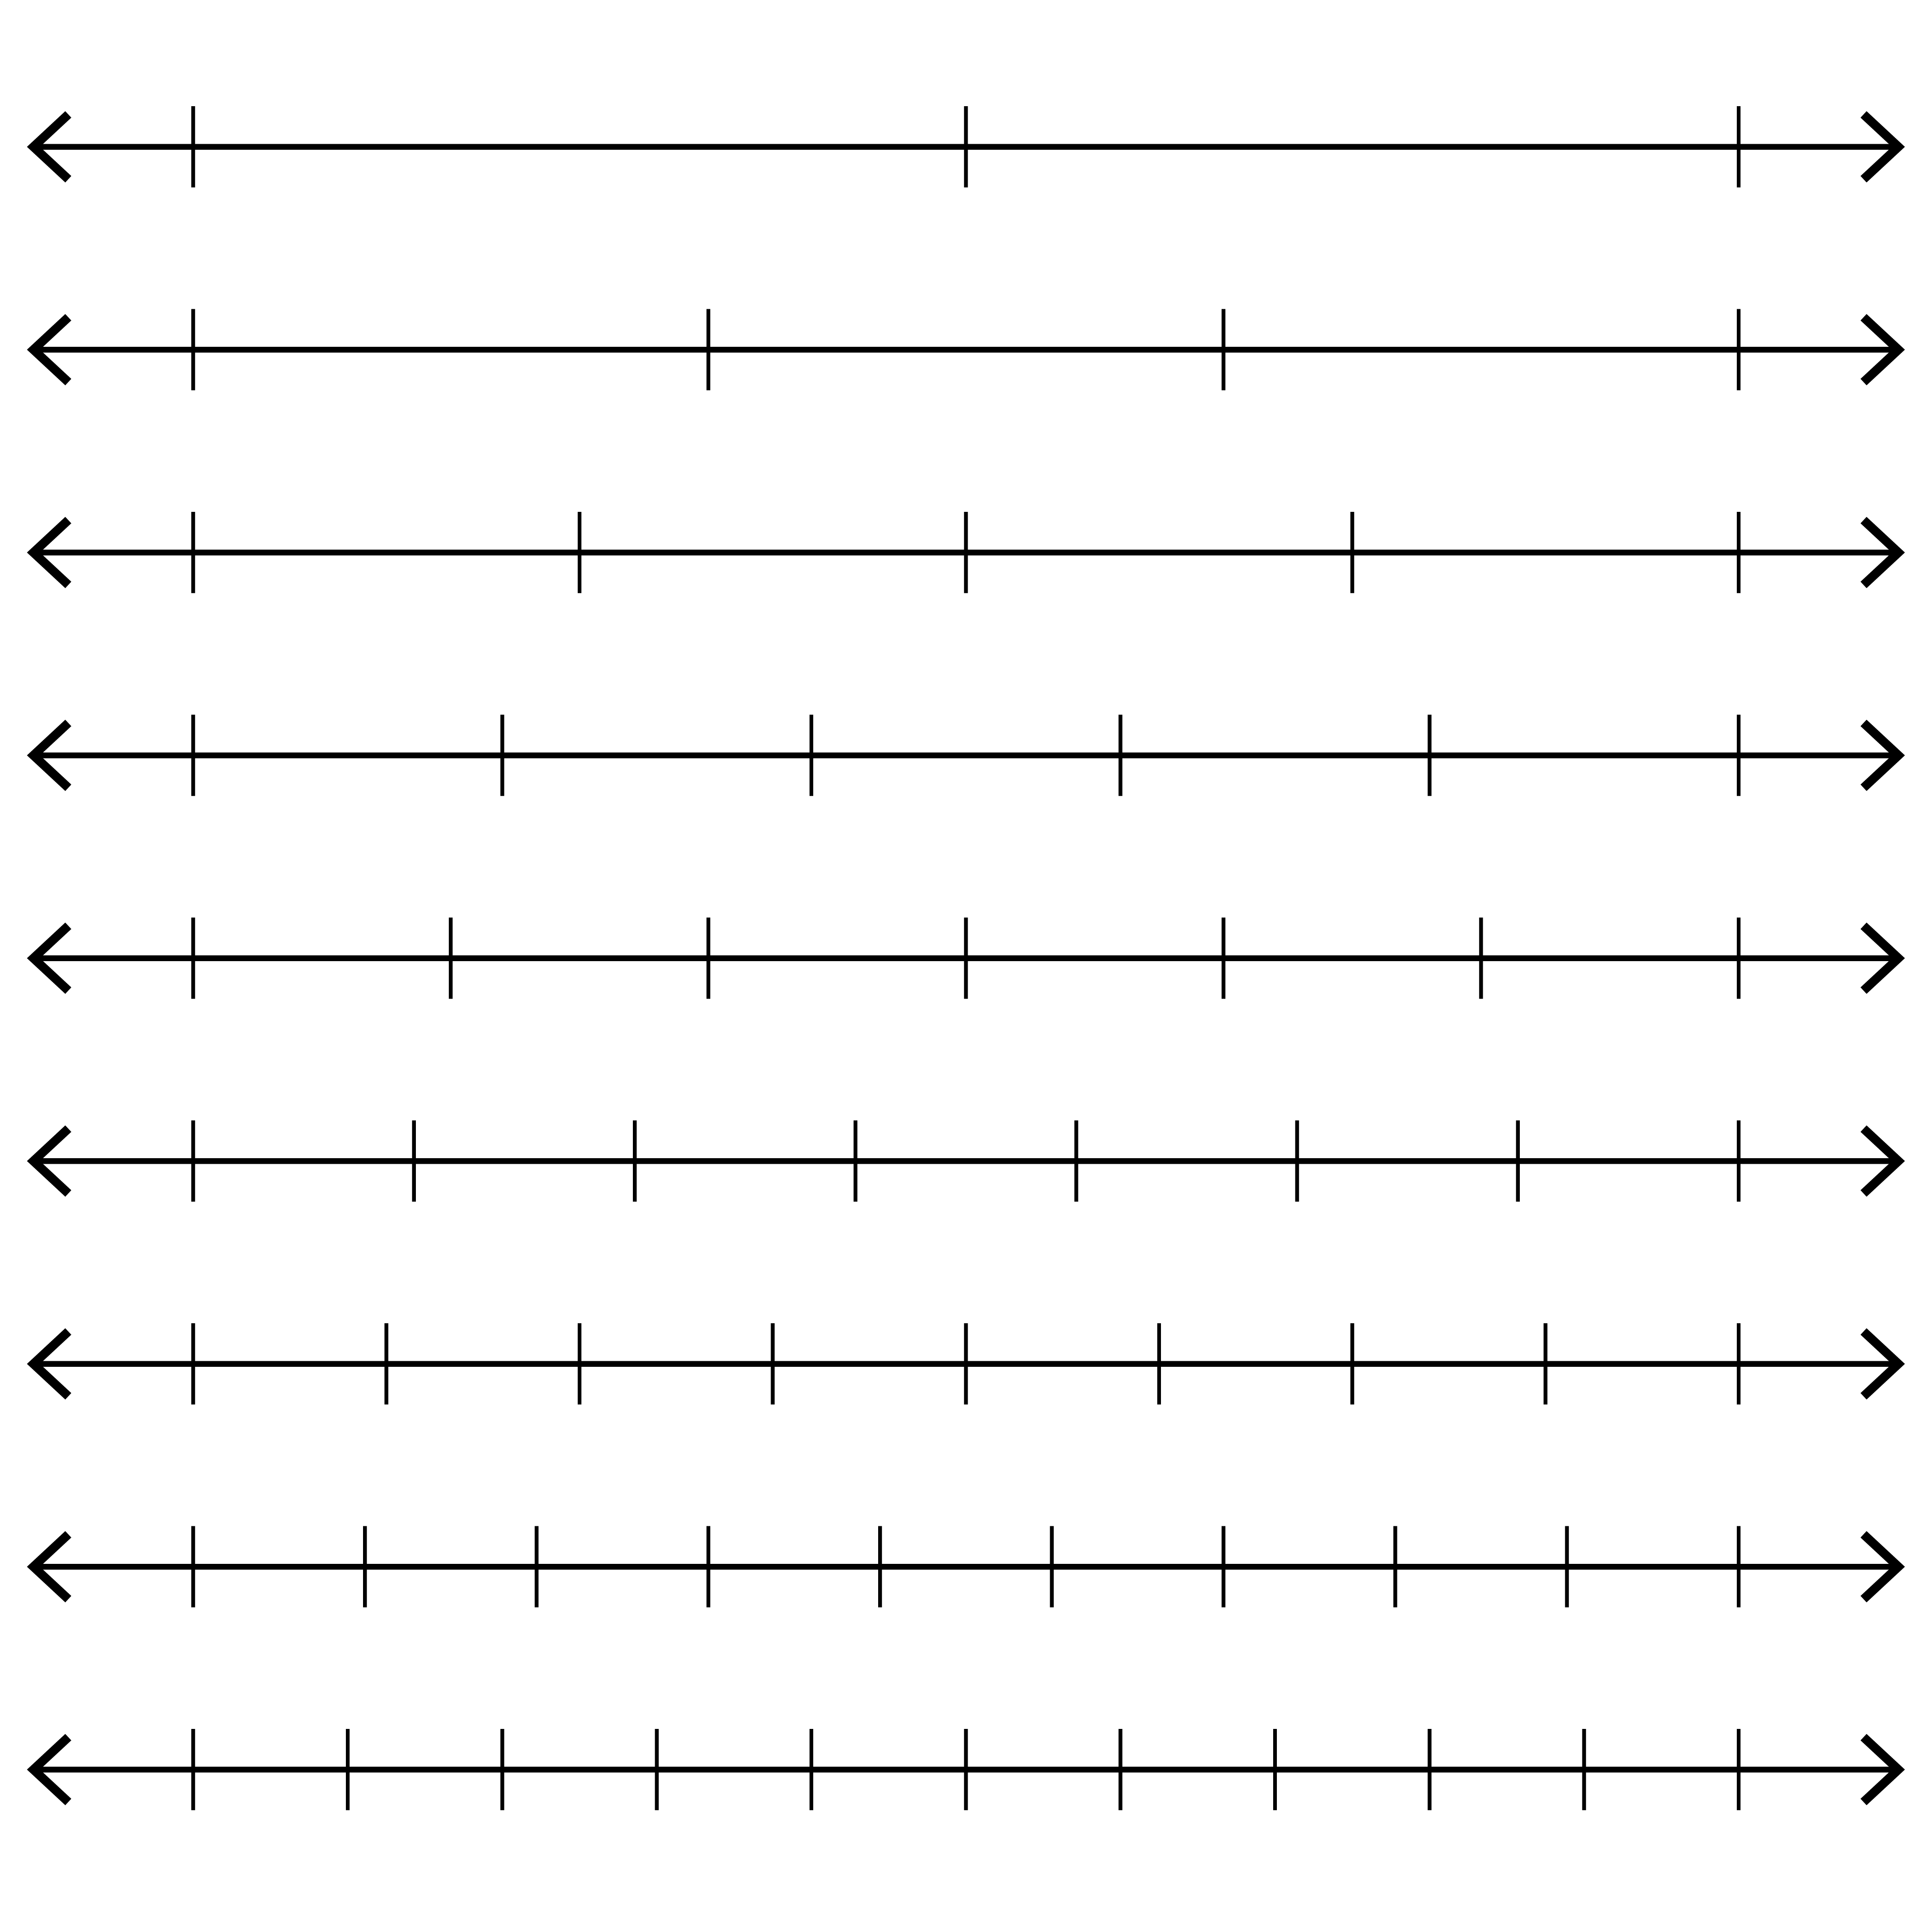 Printable Blank Number Line Template Printable Templates